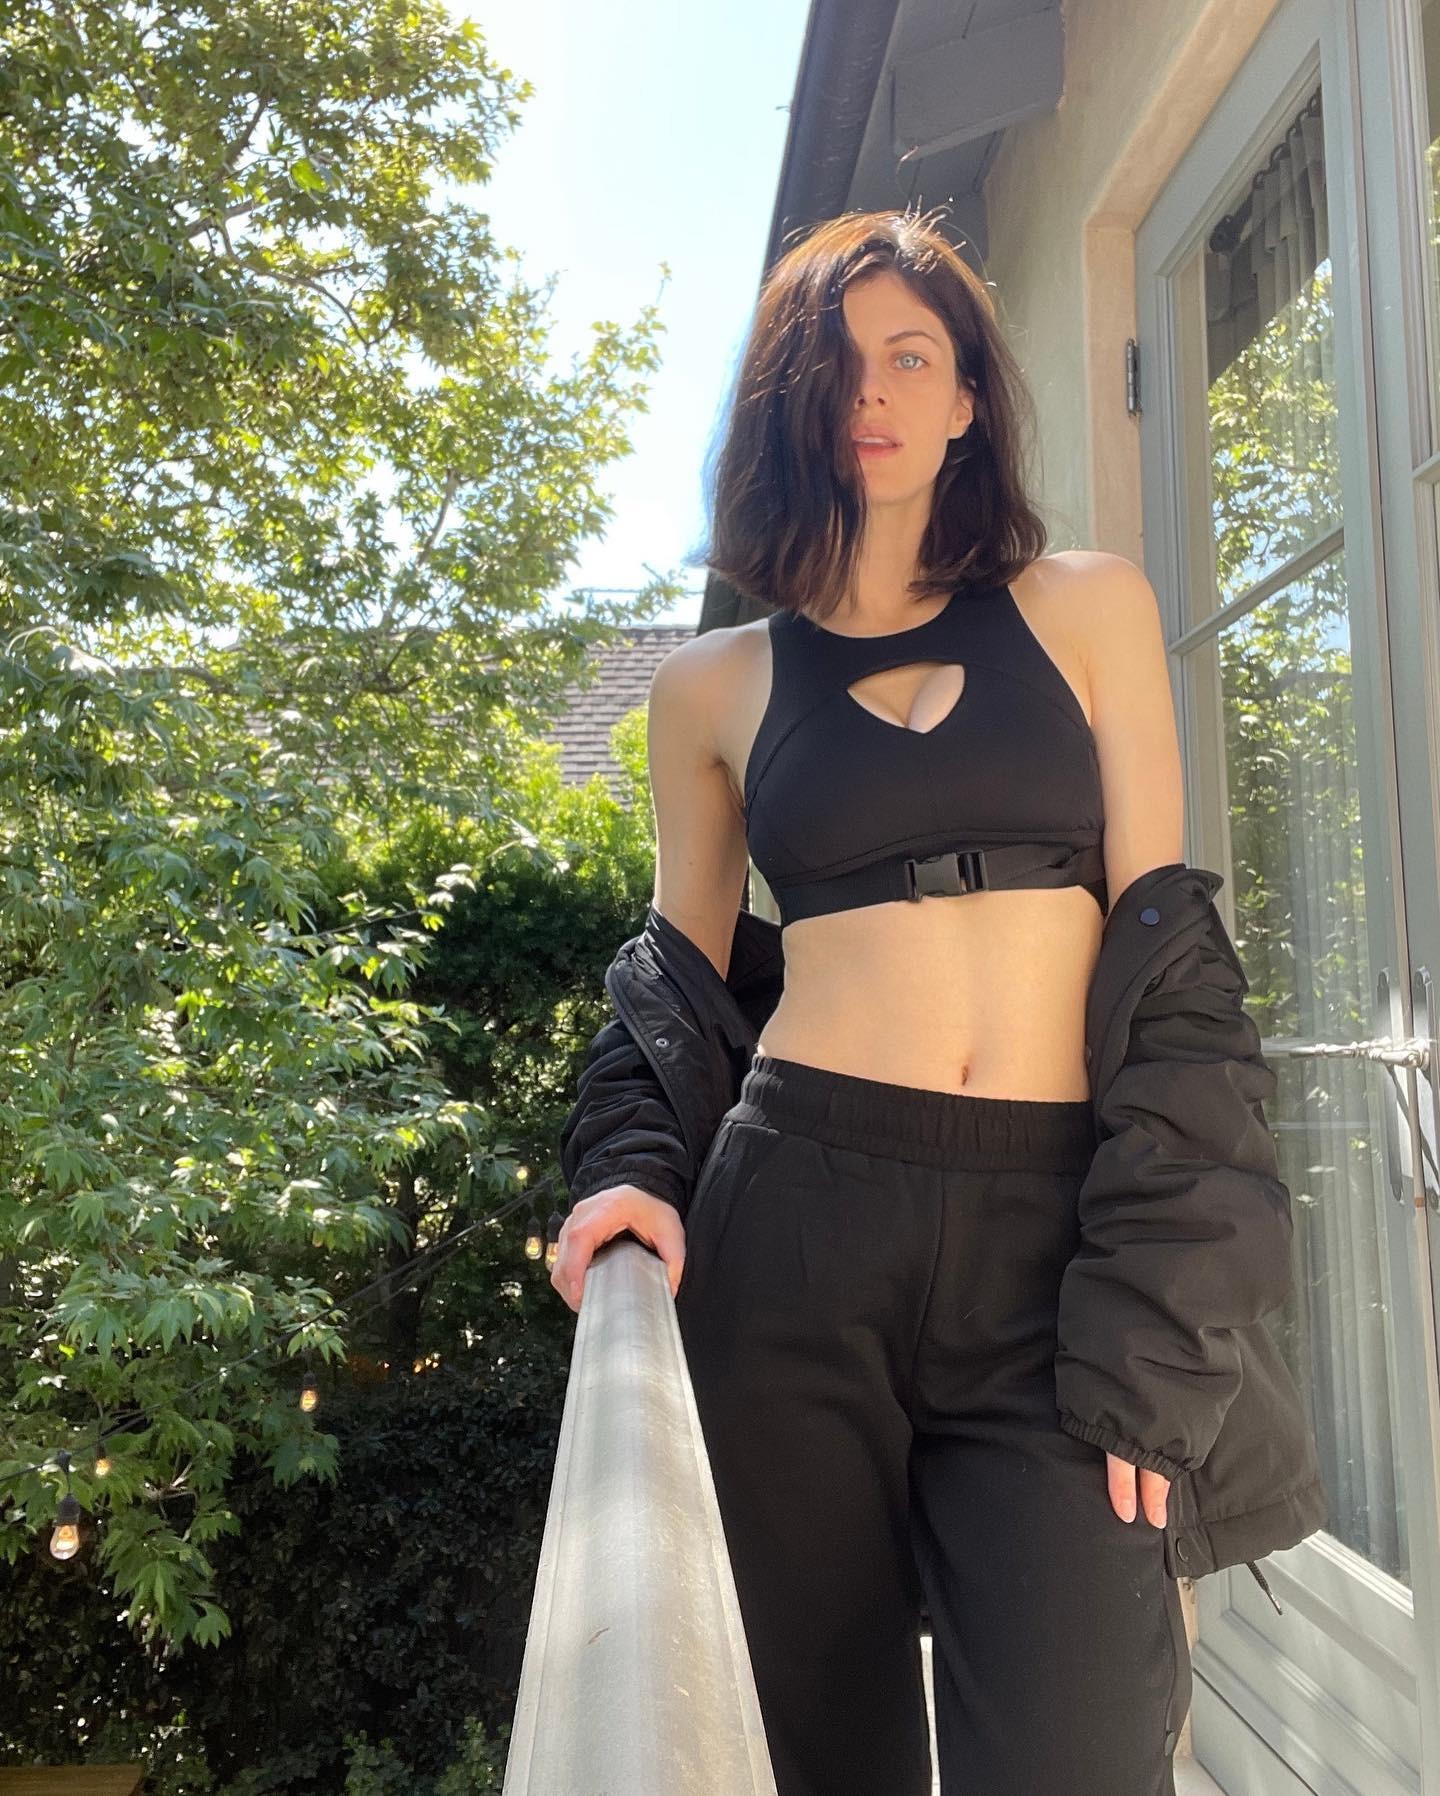 Alexandra Daddario Posing In A Chic “alo Yoga” Outfit In Her Backyard In La 7461